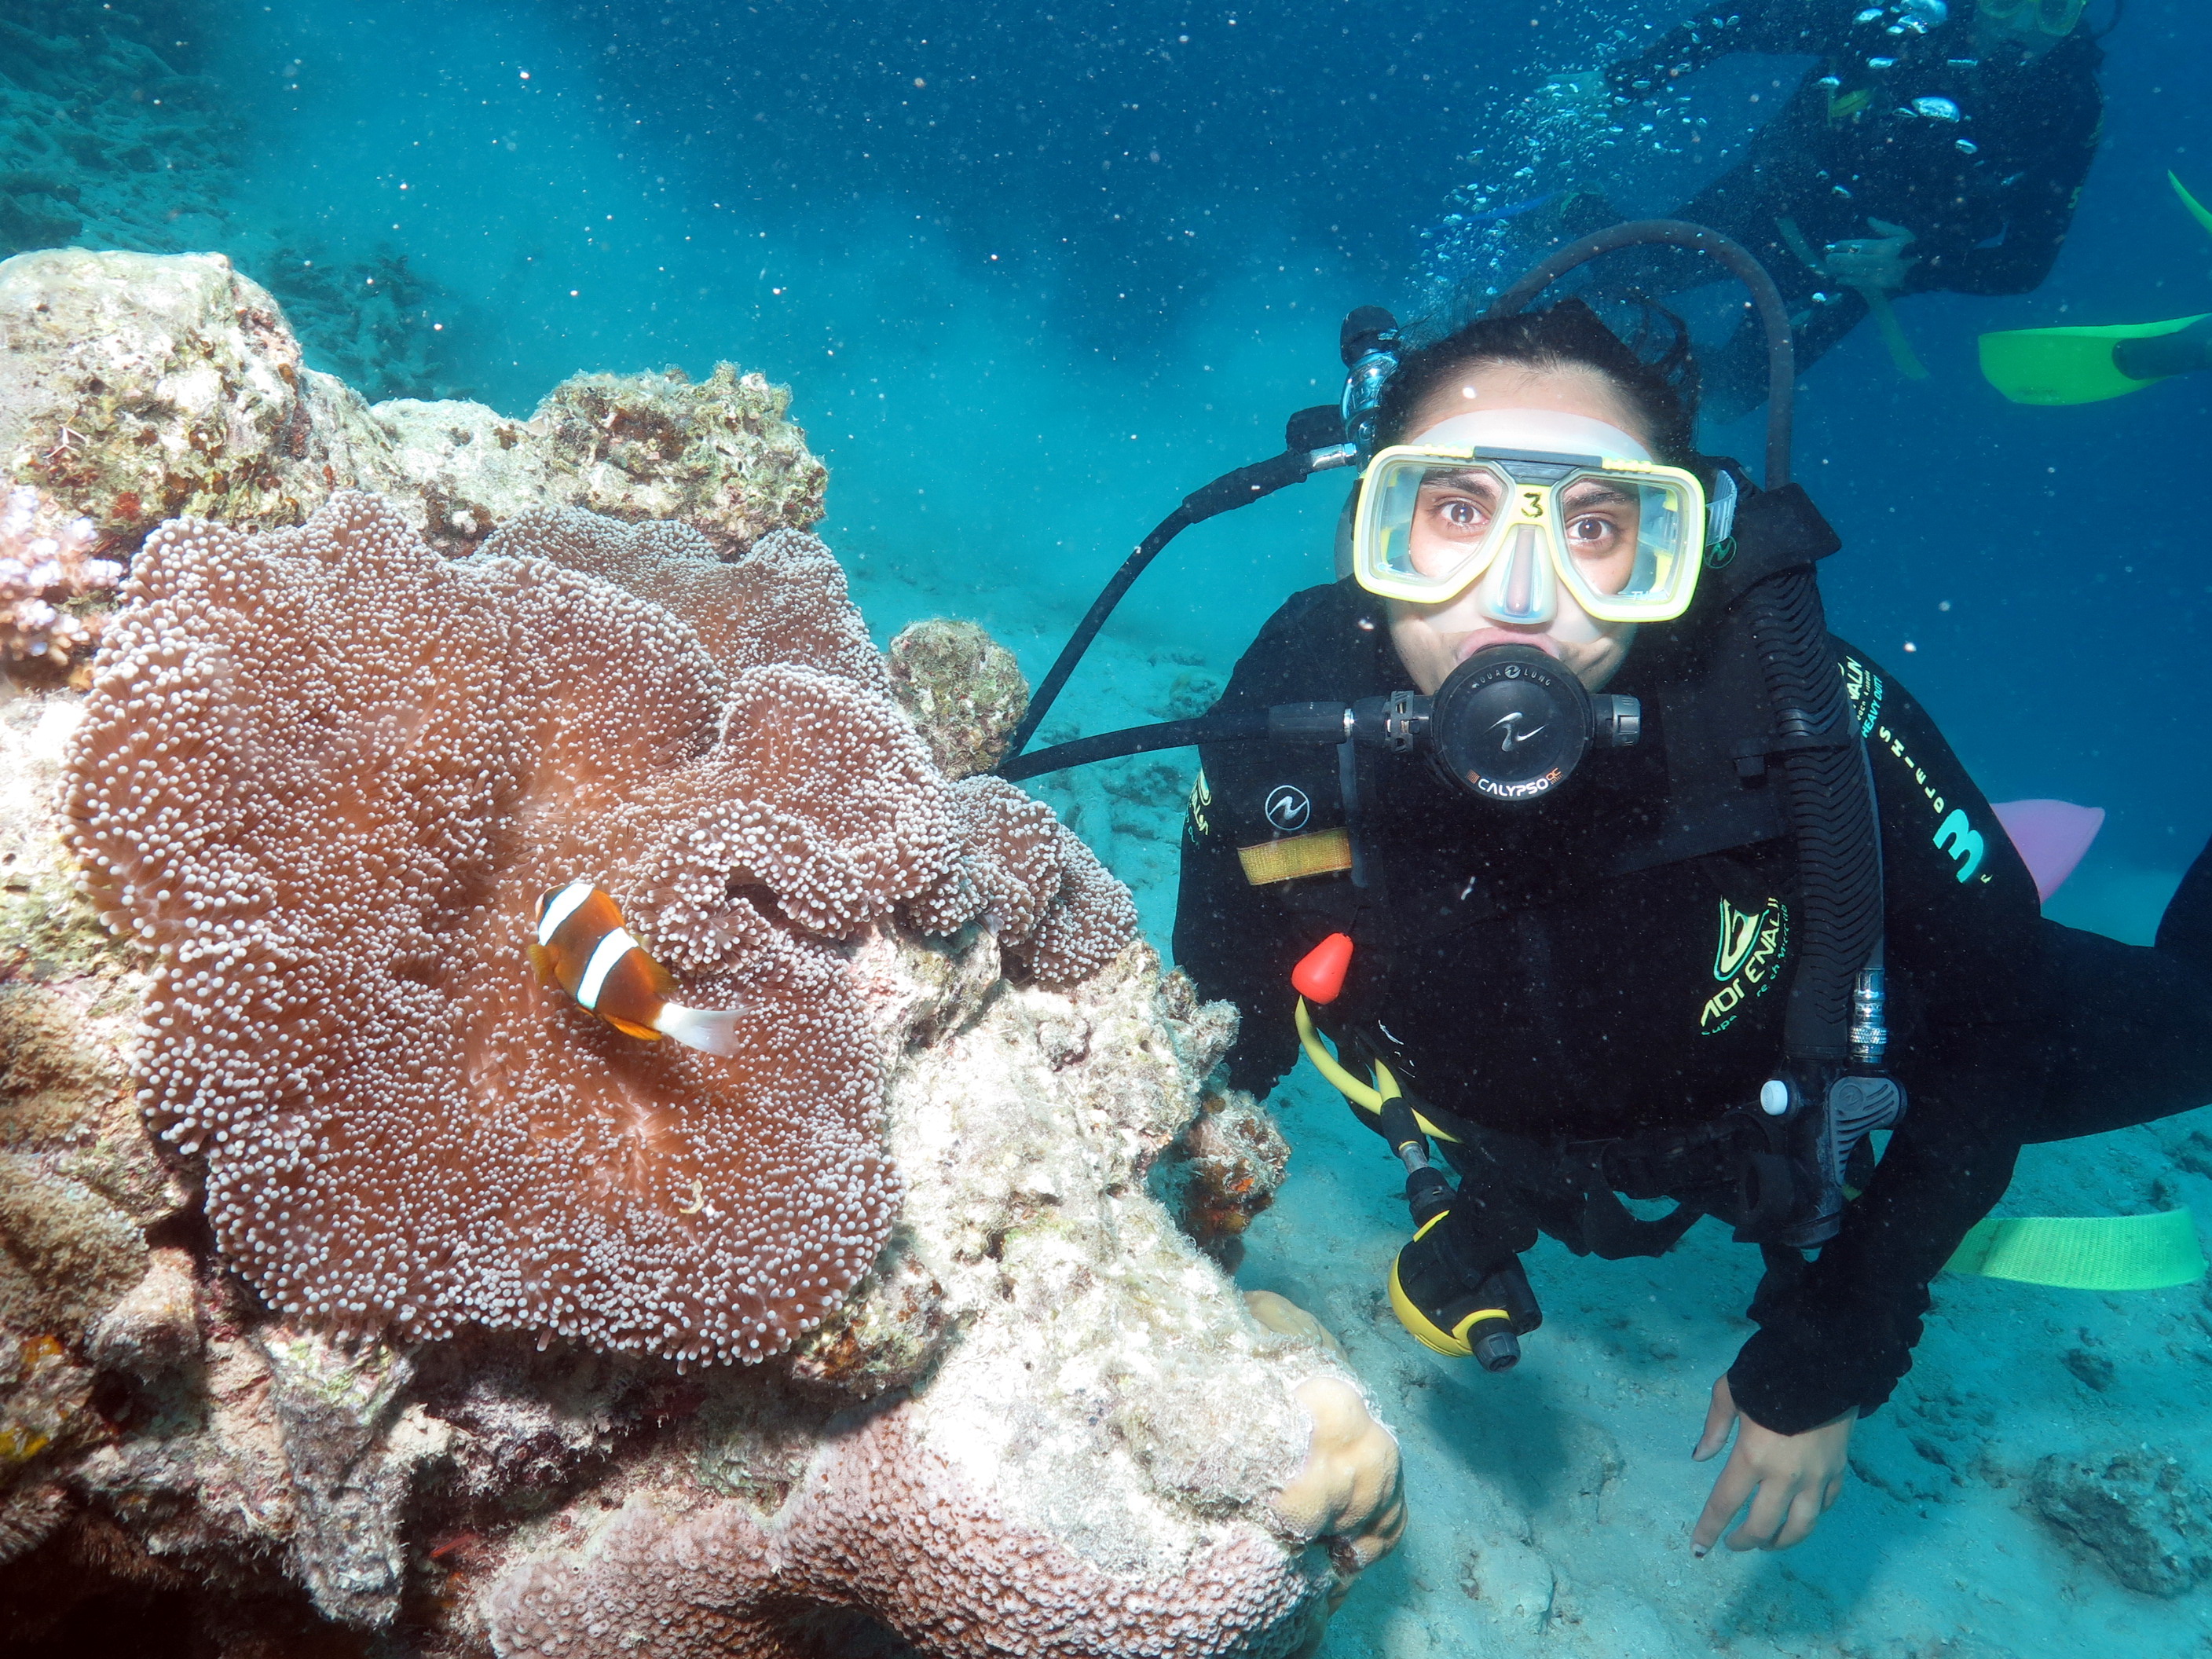 Priya diving near an anemone with a clownfish